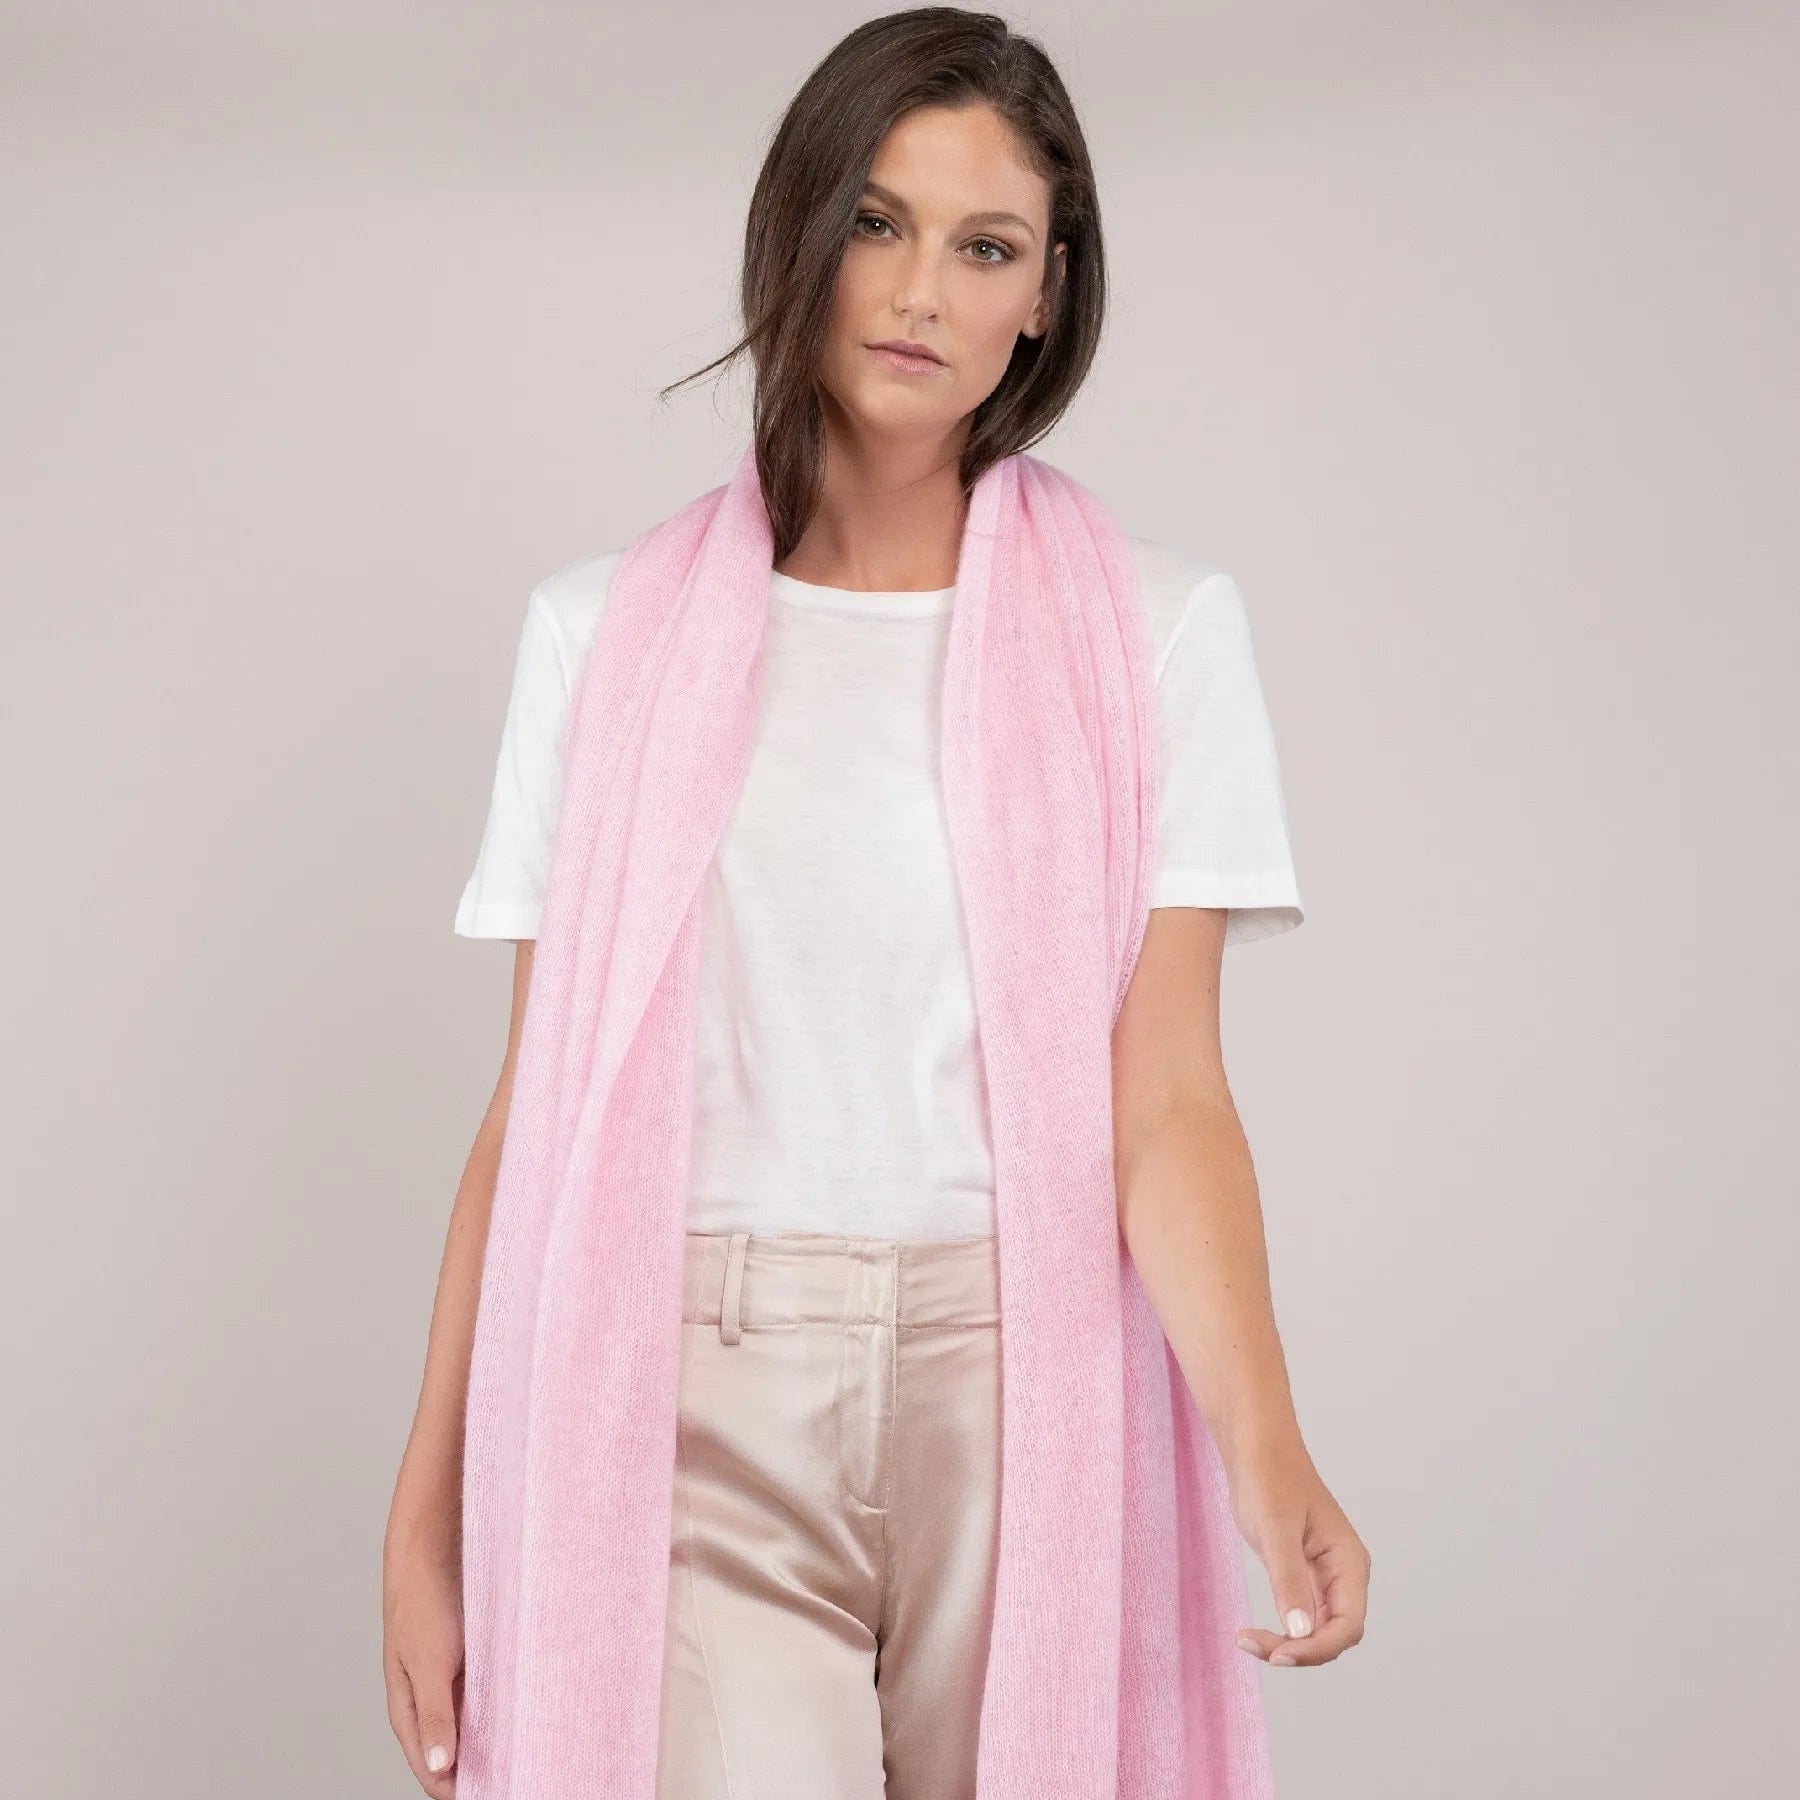 Alashan Cashmere Company Women's Accessories Pink Swirl Cotton Cashmere Breezy Travel Wrap